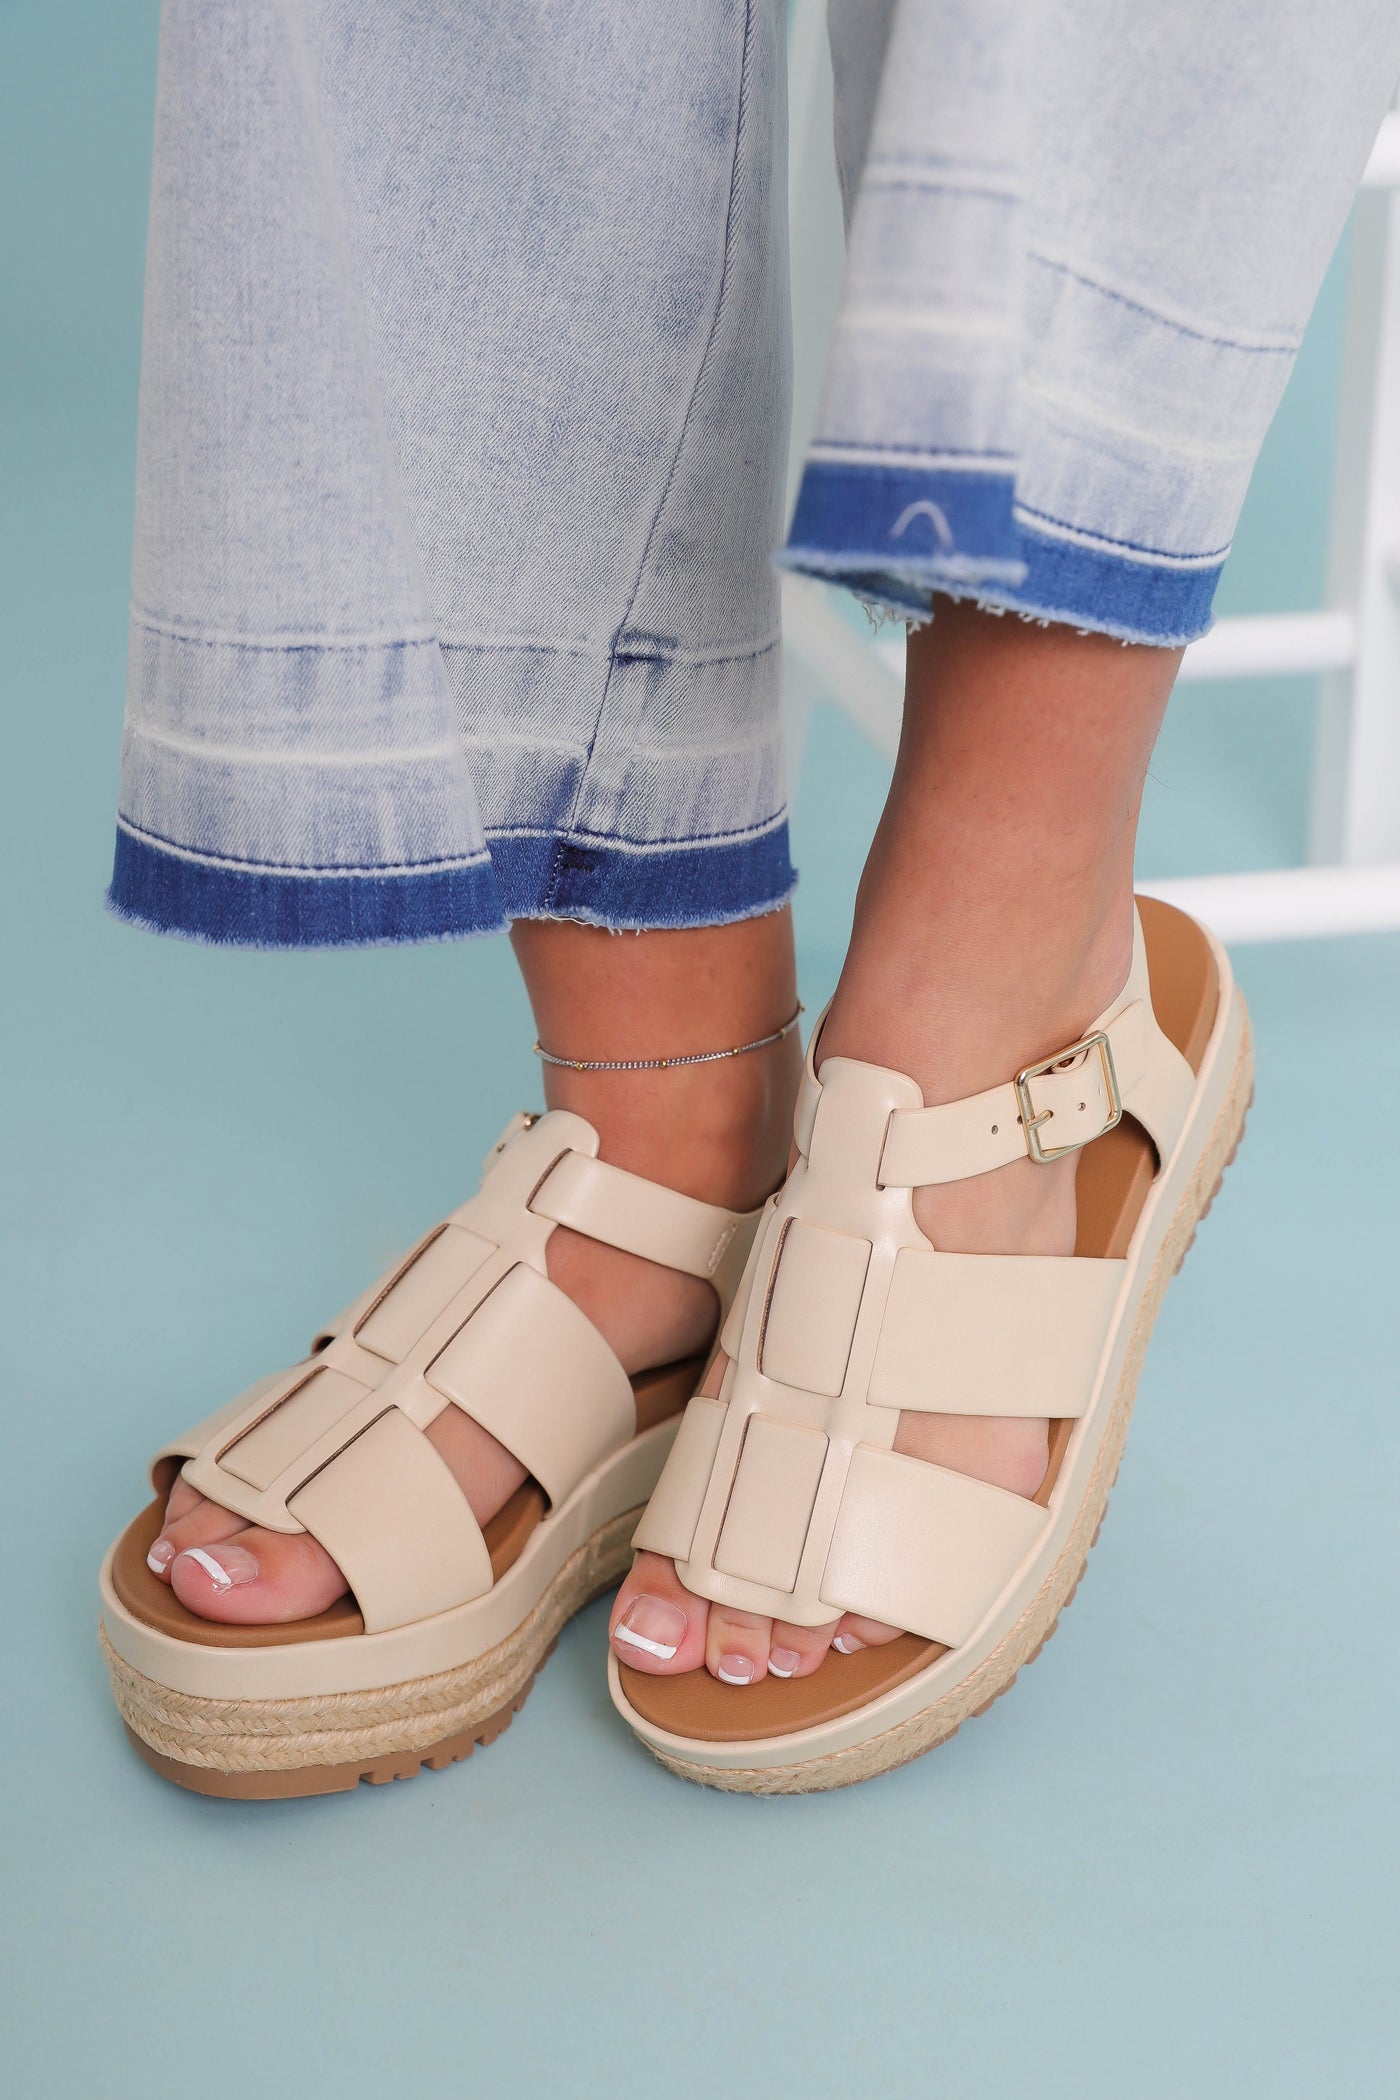 Open Toe Platform Sandals- Trendy Platform Sandals- Women's Summer Shoes